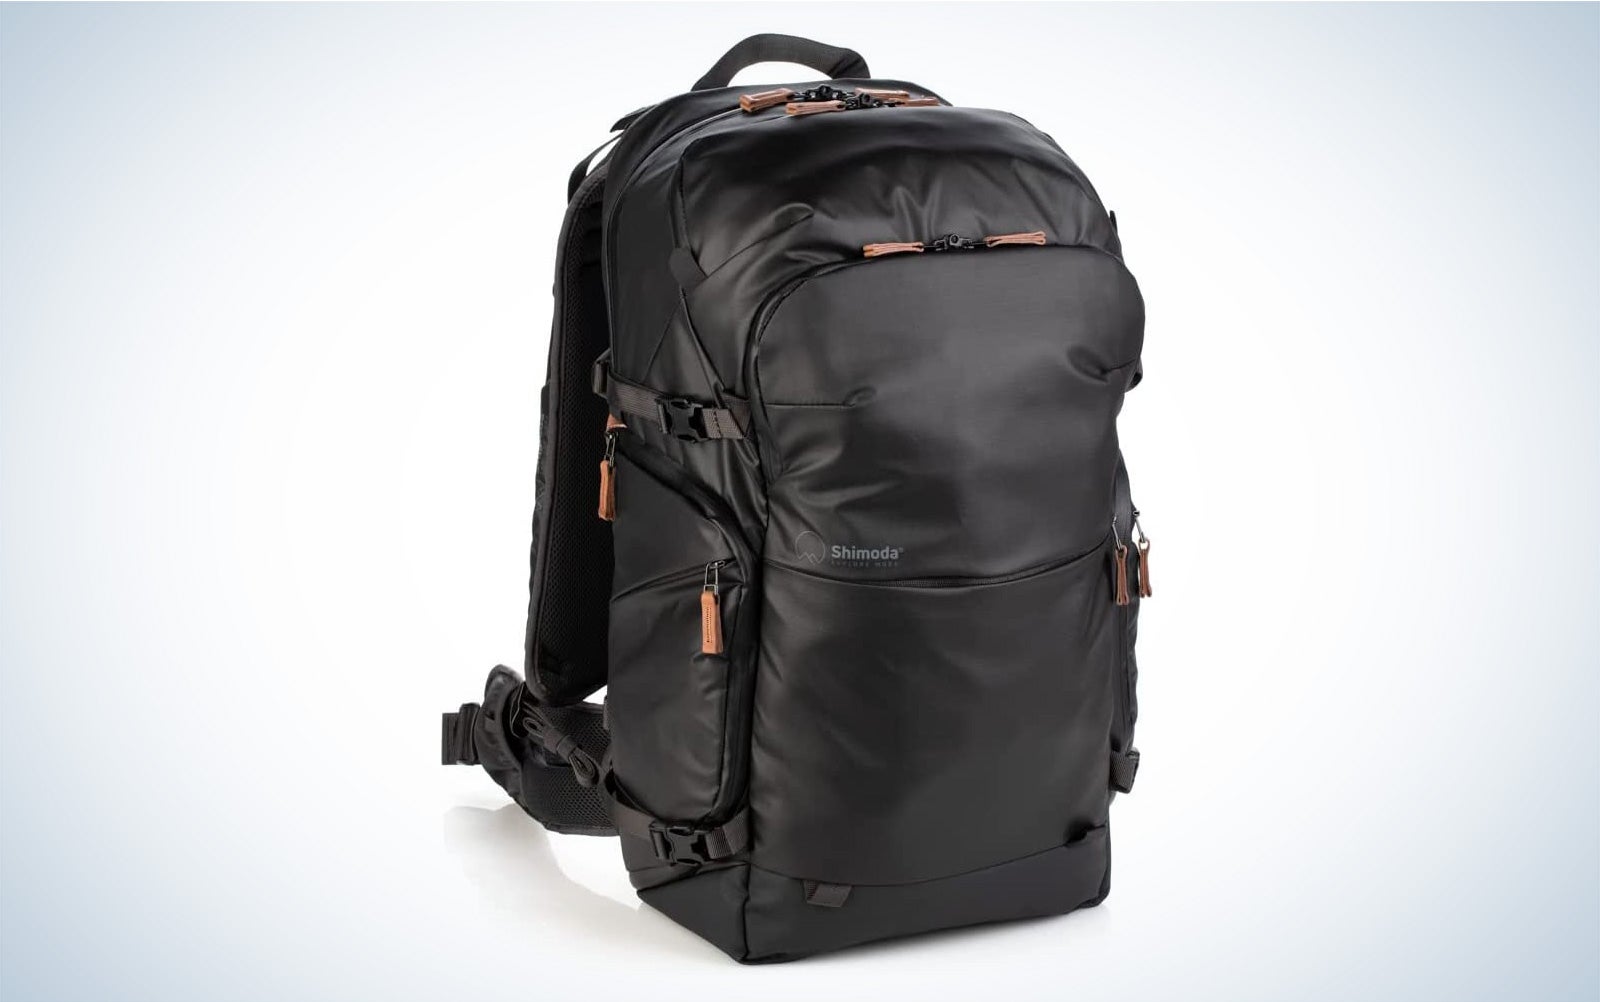 Shimoda Explore V2 backpack